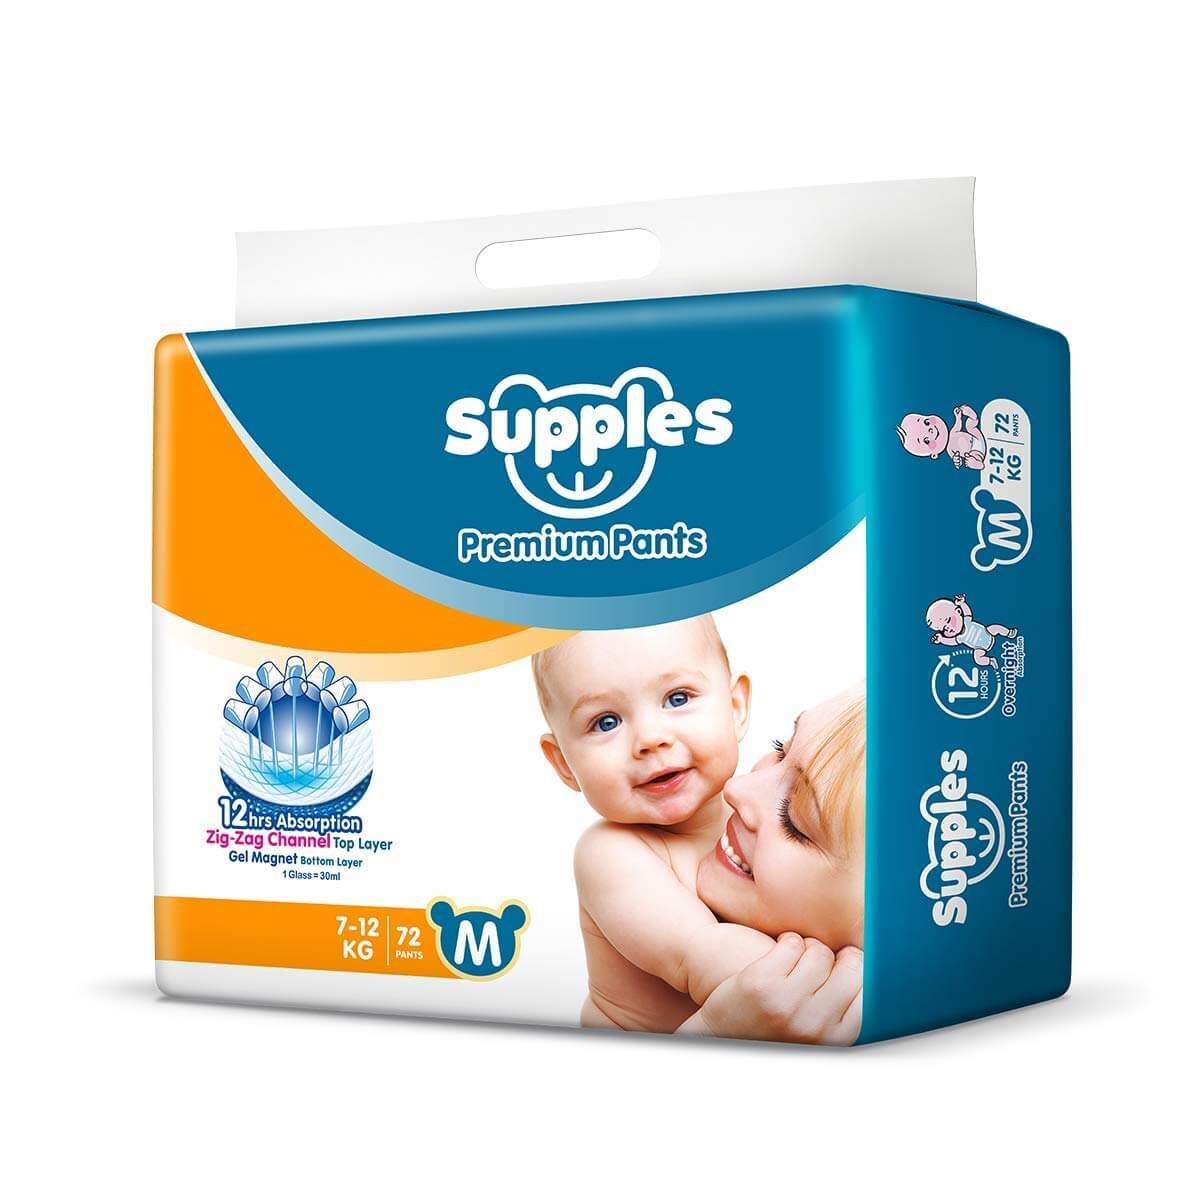 Supples Baby Pants Diapers, Medium (7-12 kg), 72 Count